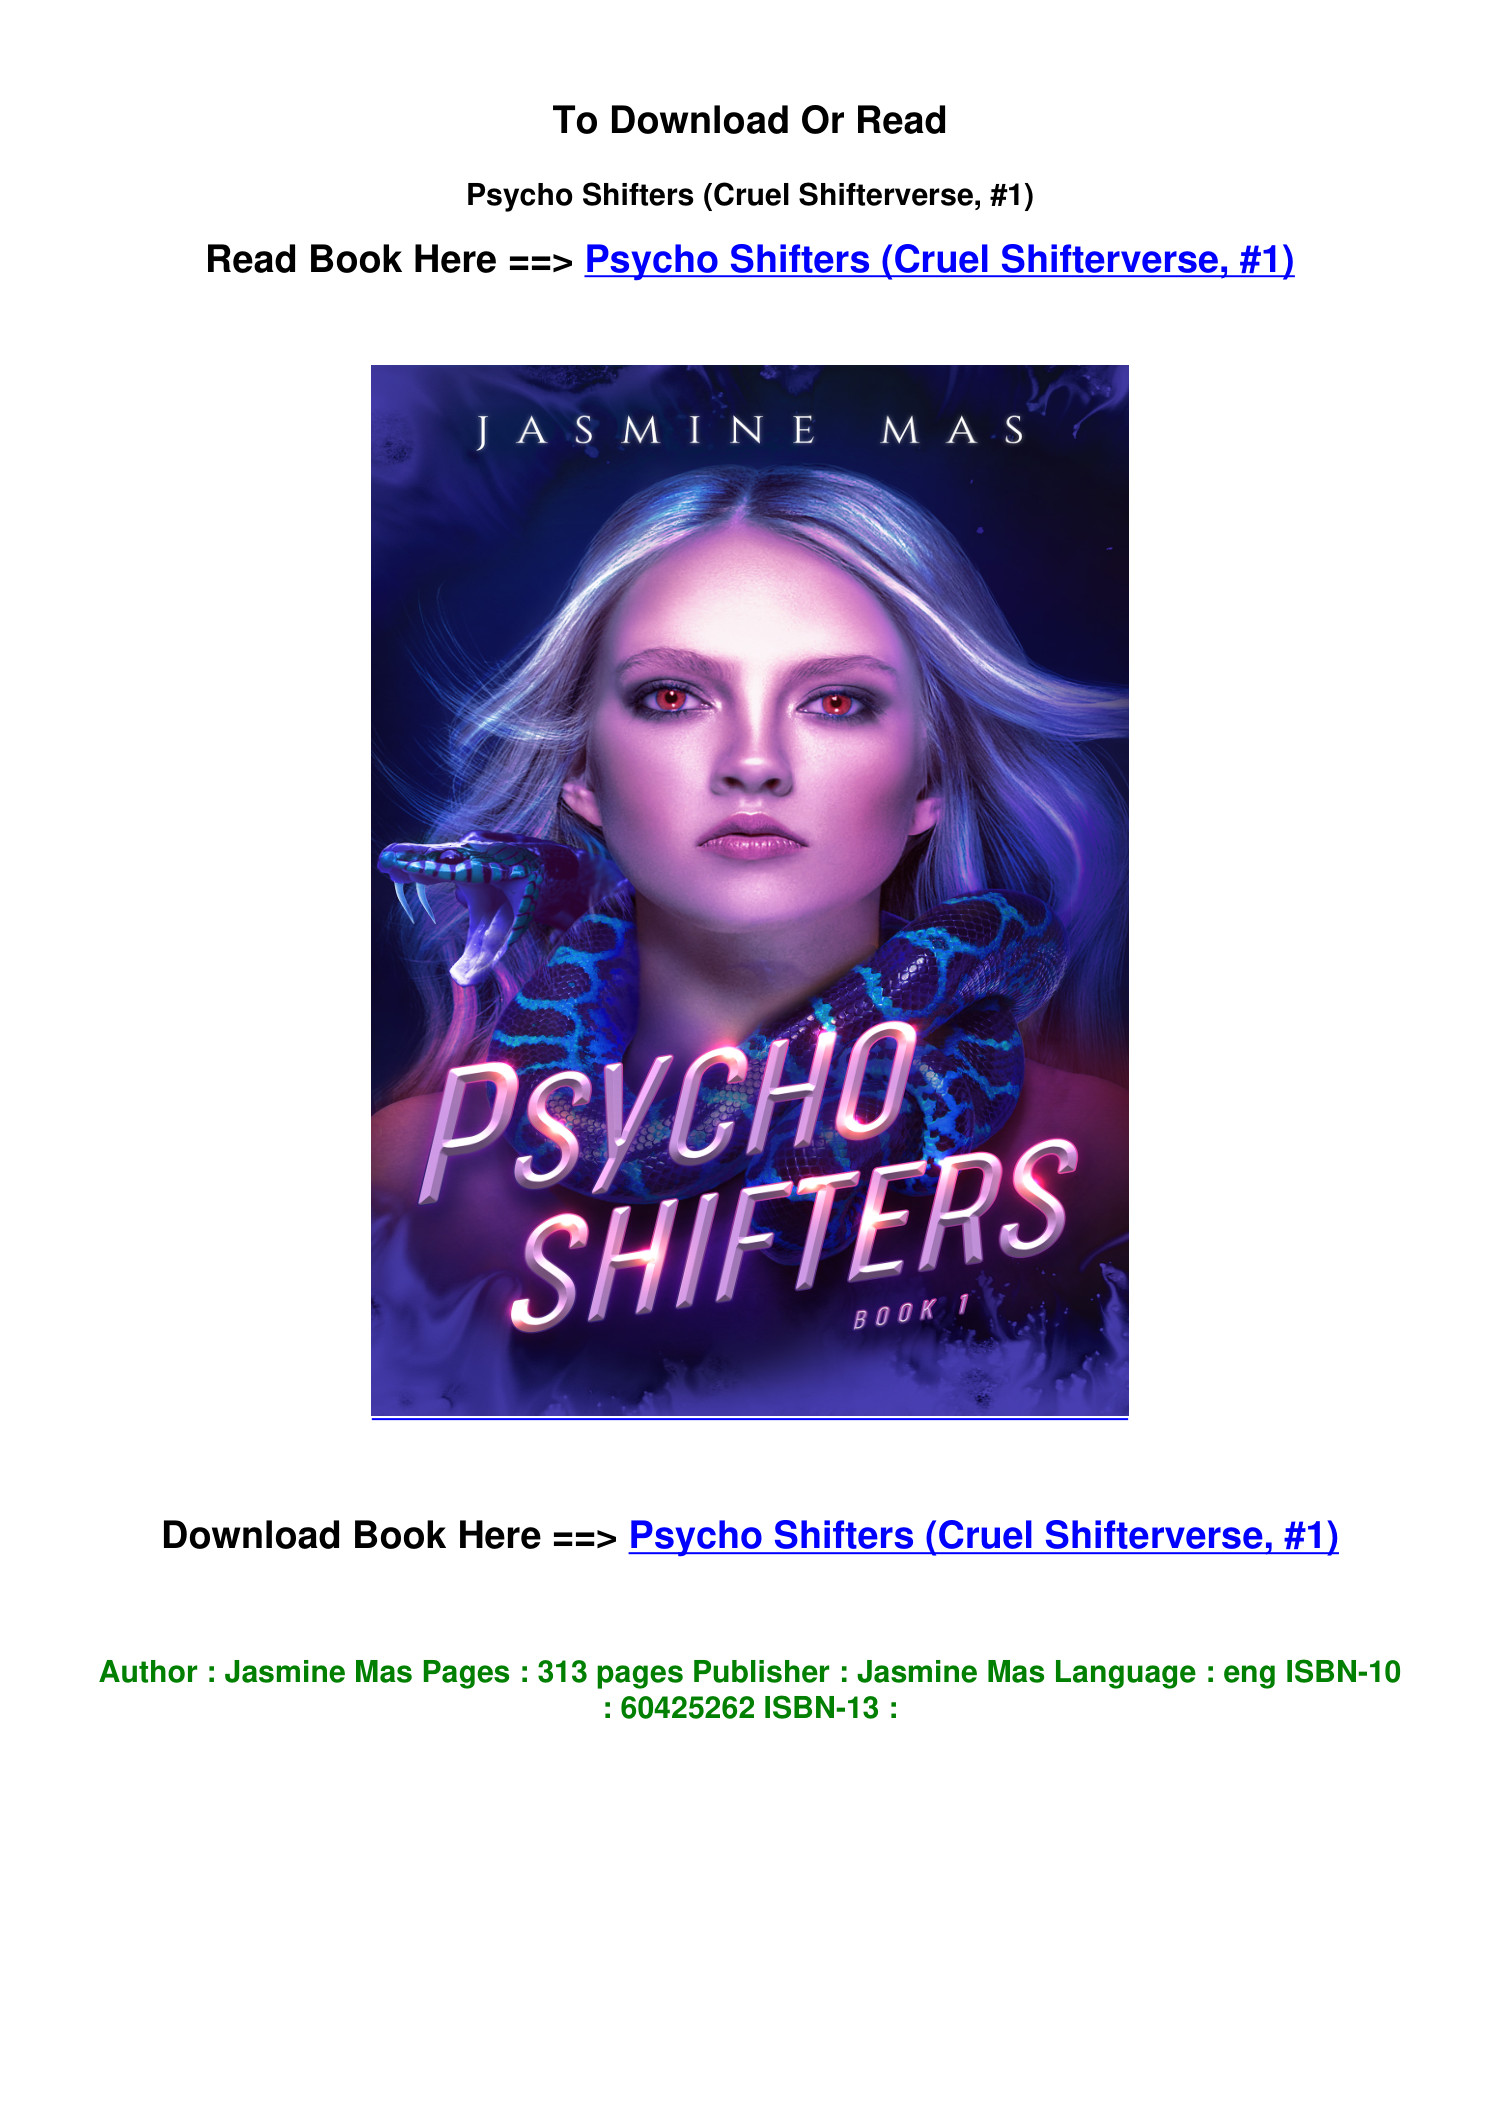 Psycho Shifters Livre audio, Jasmine Mas